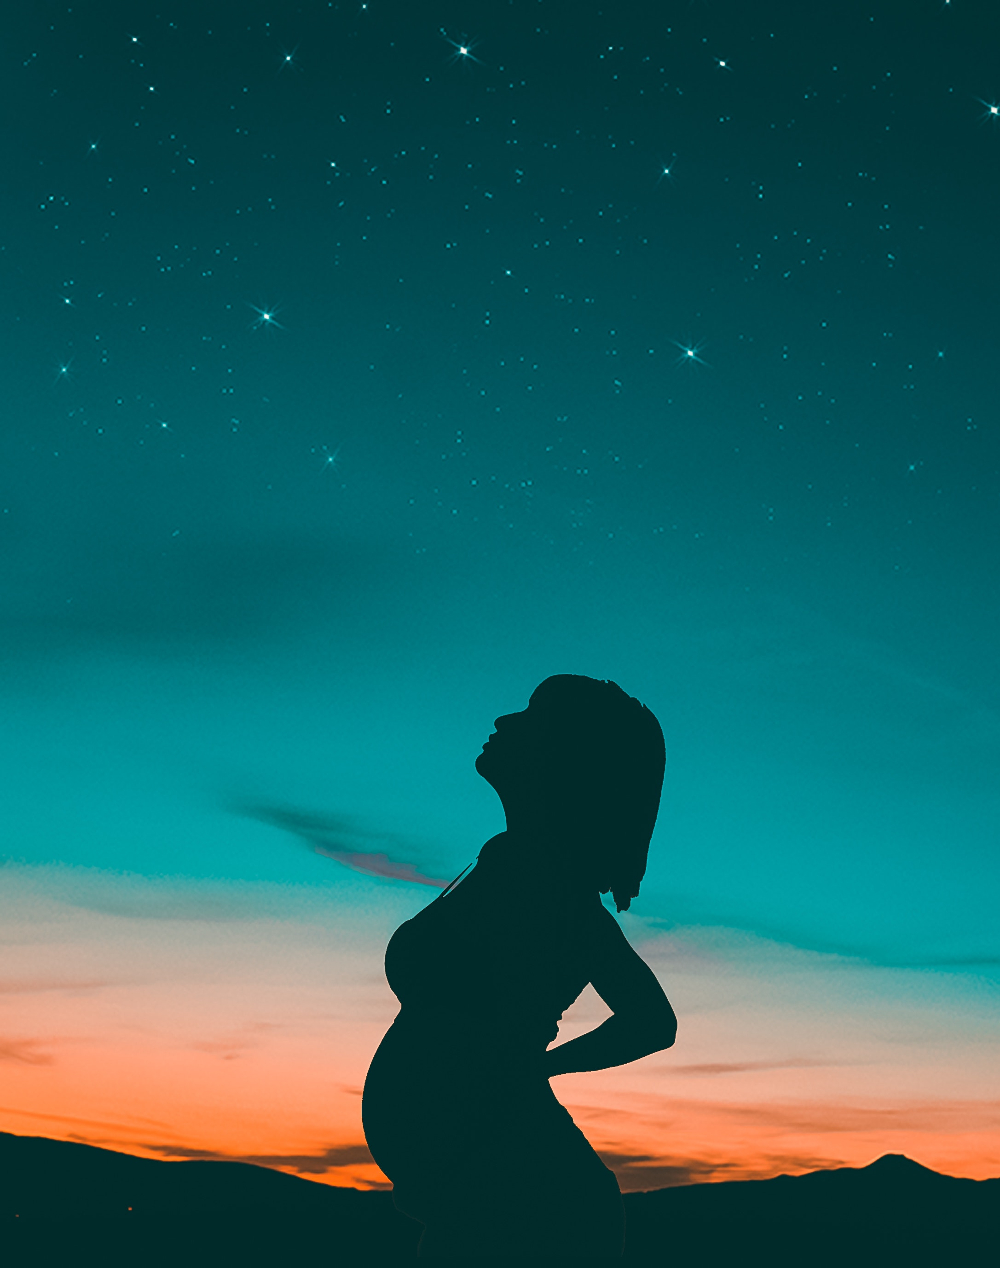 Offering Prenatal Mental Health Care May Reduce Postpartum Risk